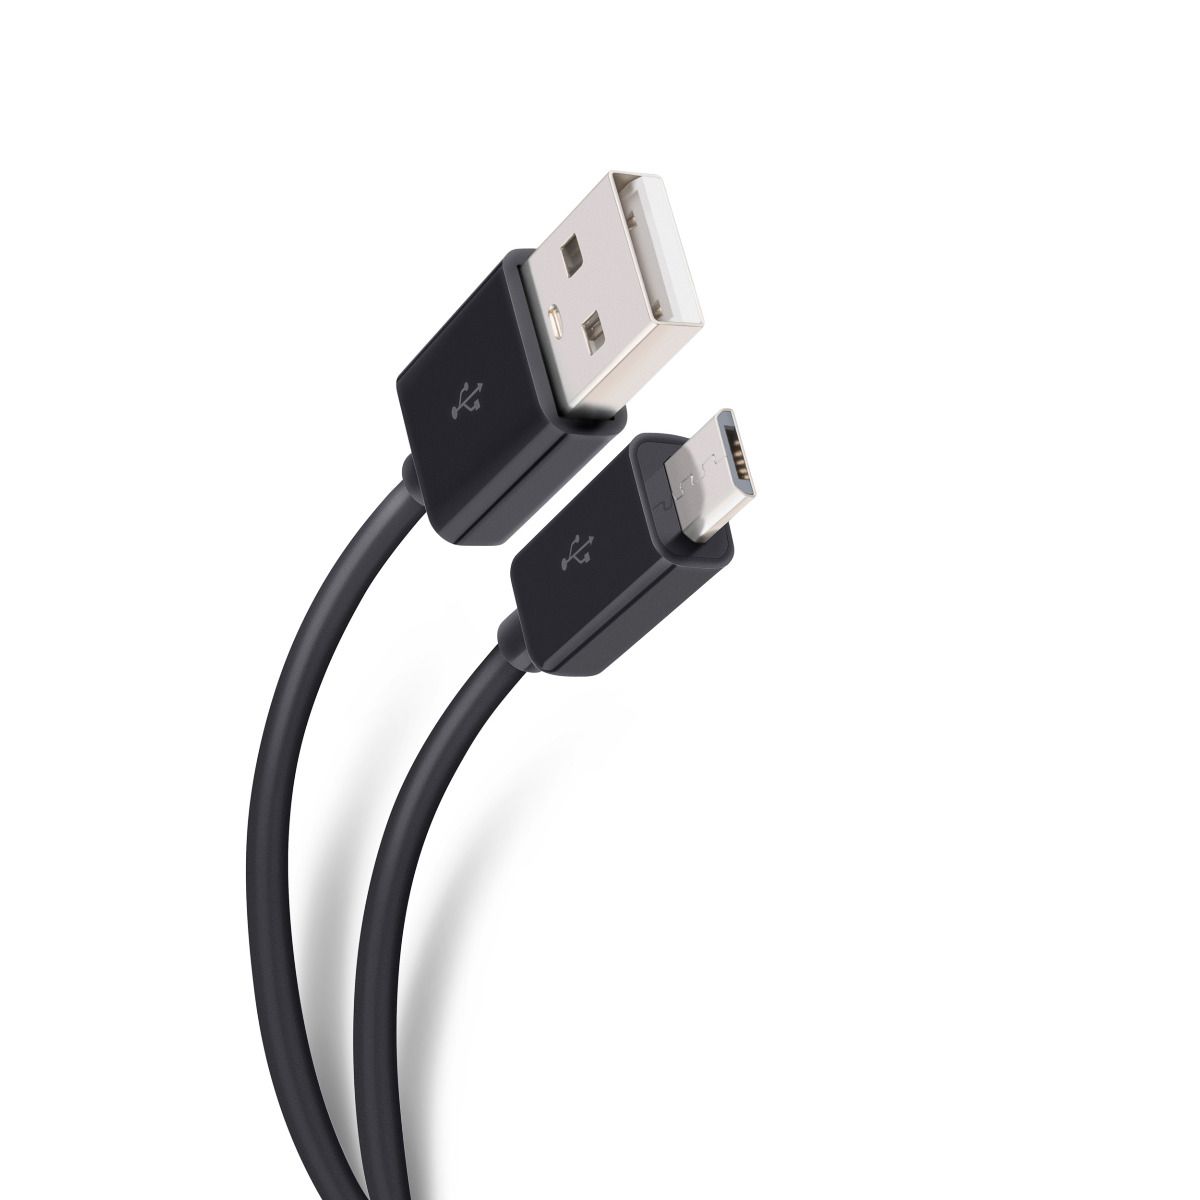 Cable micro USB macho hembra a 2 extremos de cable abiertos, conector USB  2.0 a 2 cables, cable de extensión de cable de alimentación, conector de